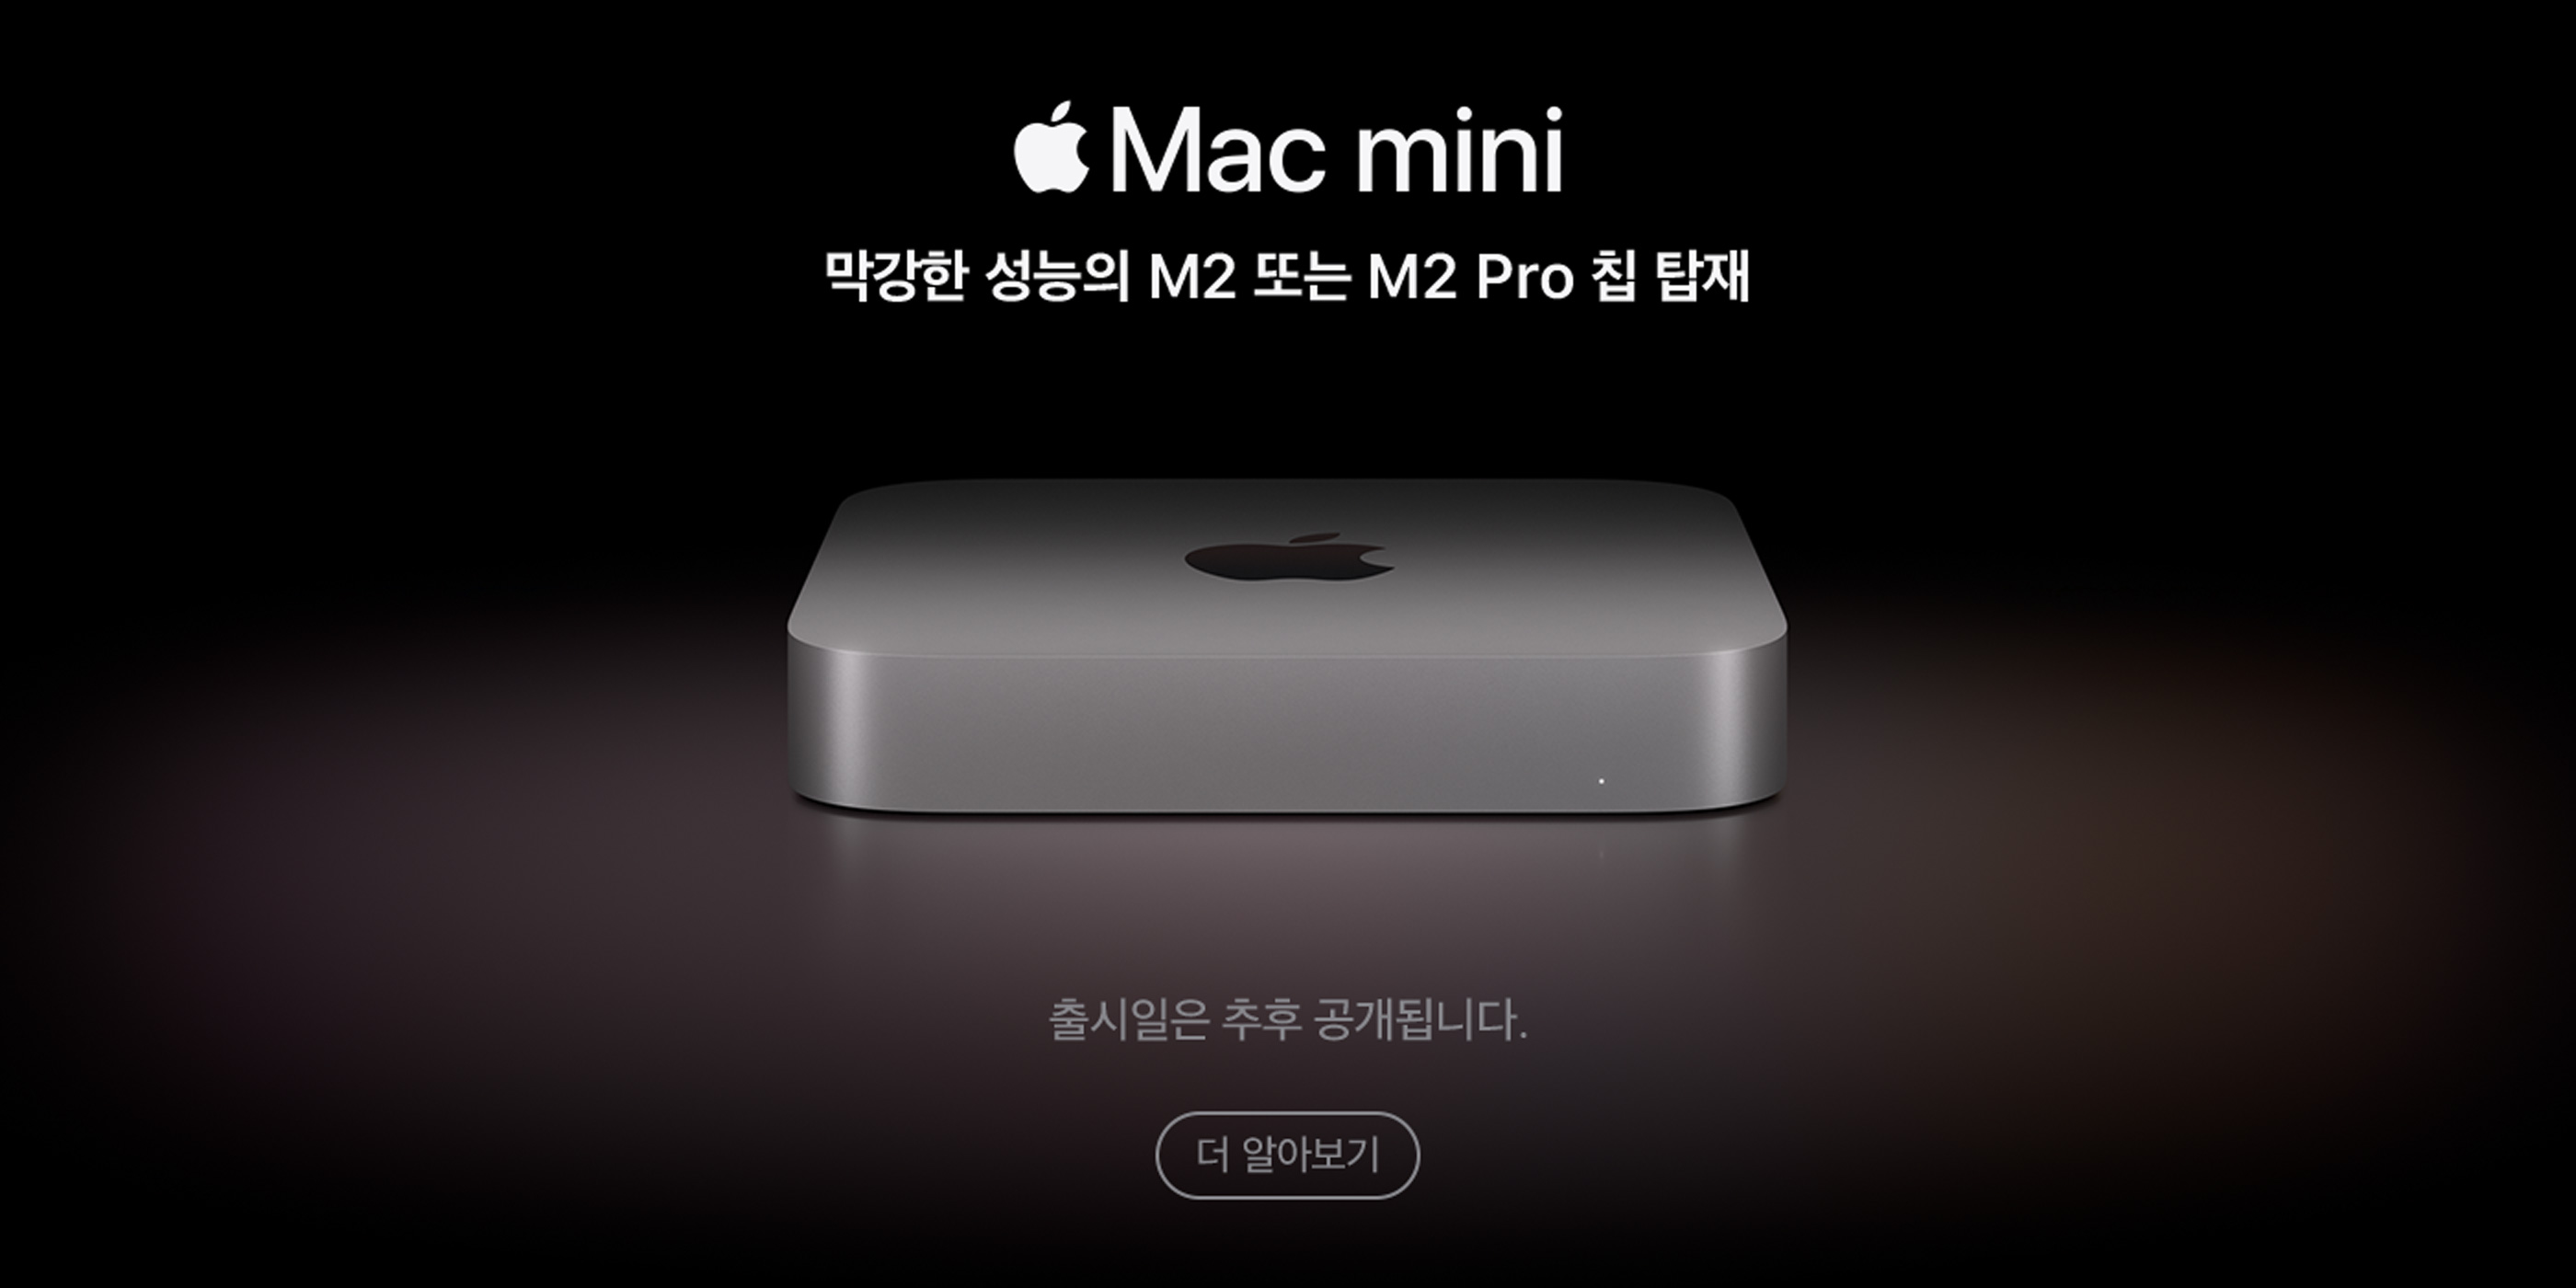 Mac mini, 출시일은 추후 공개됩니다.